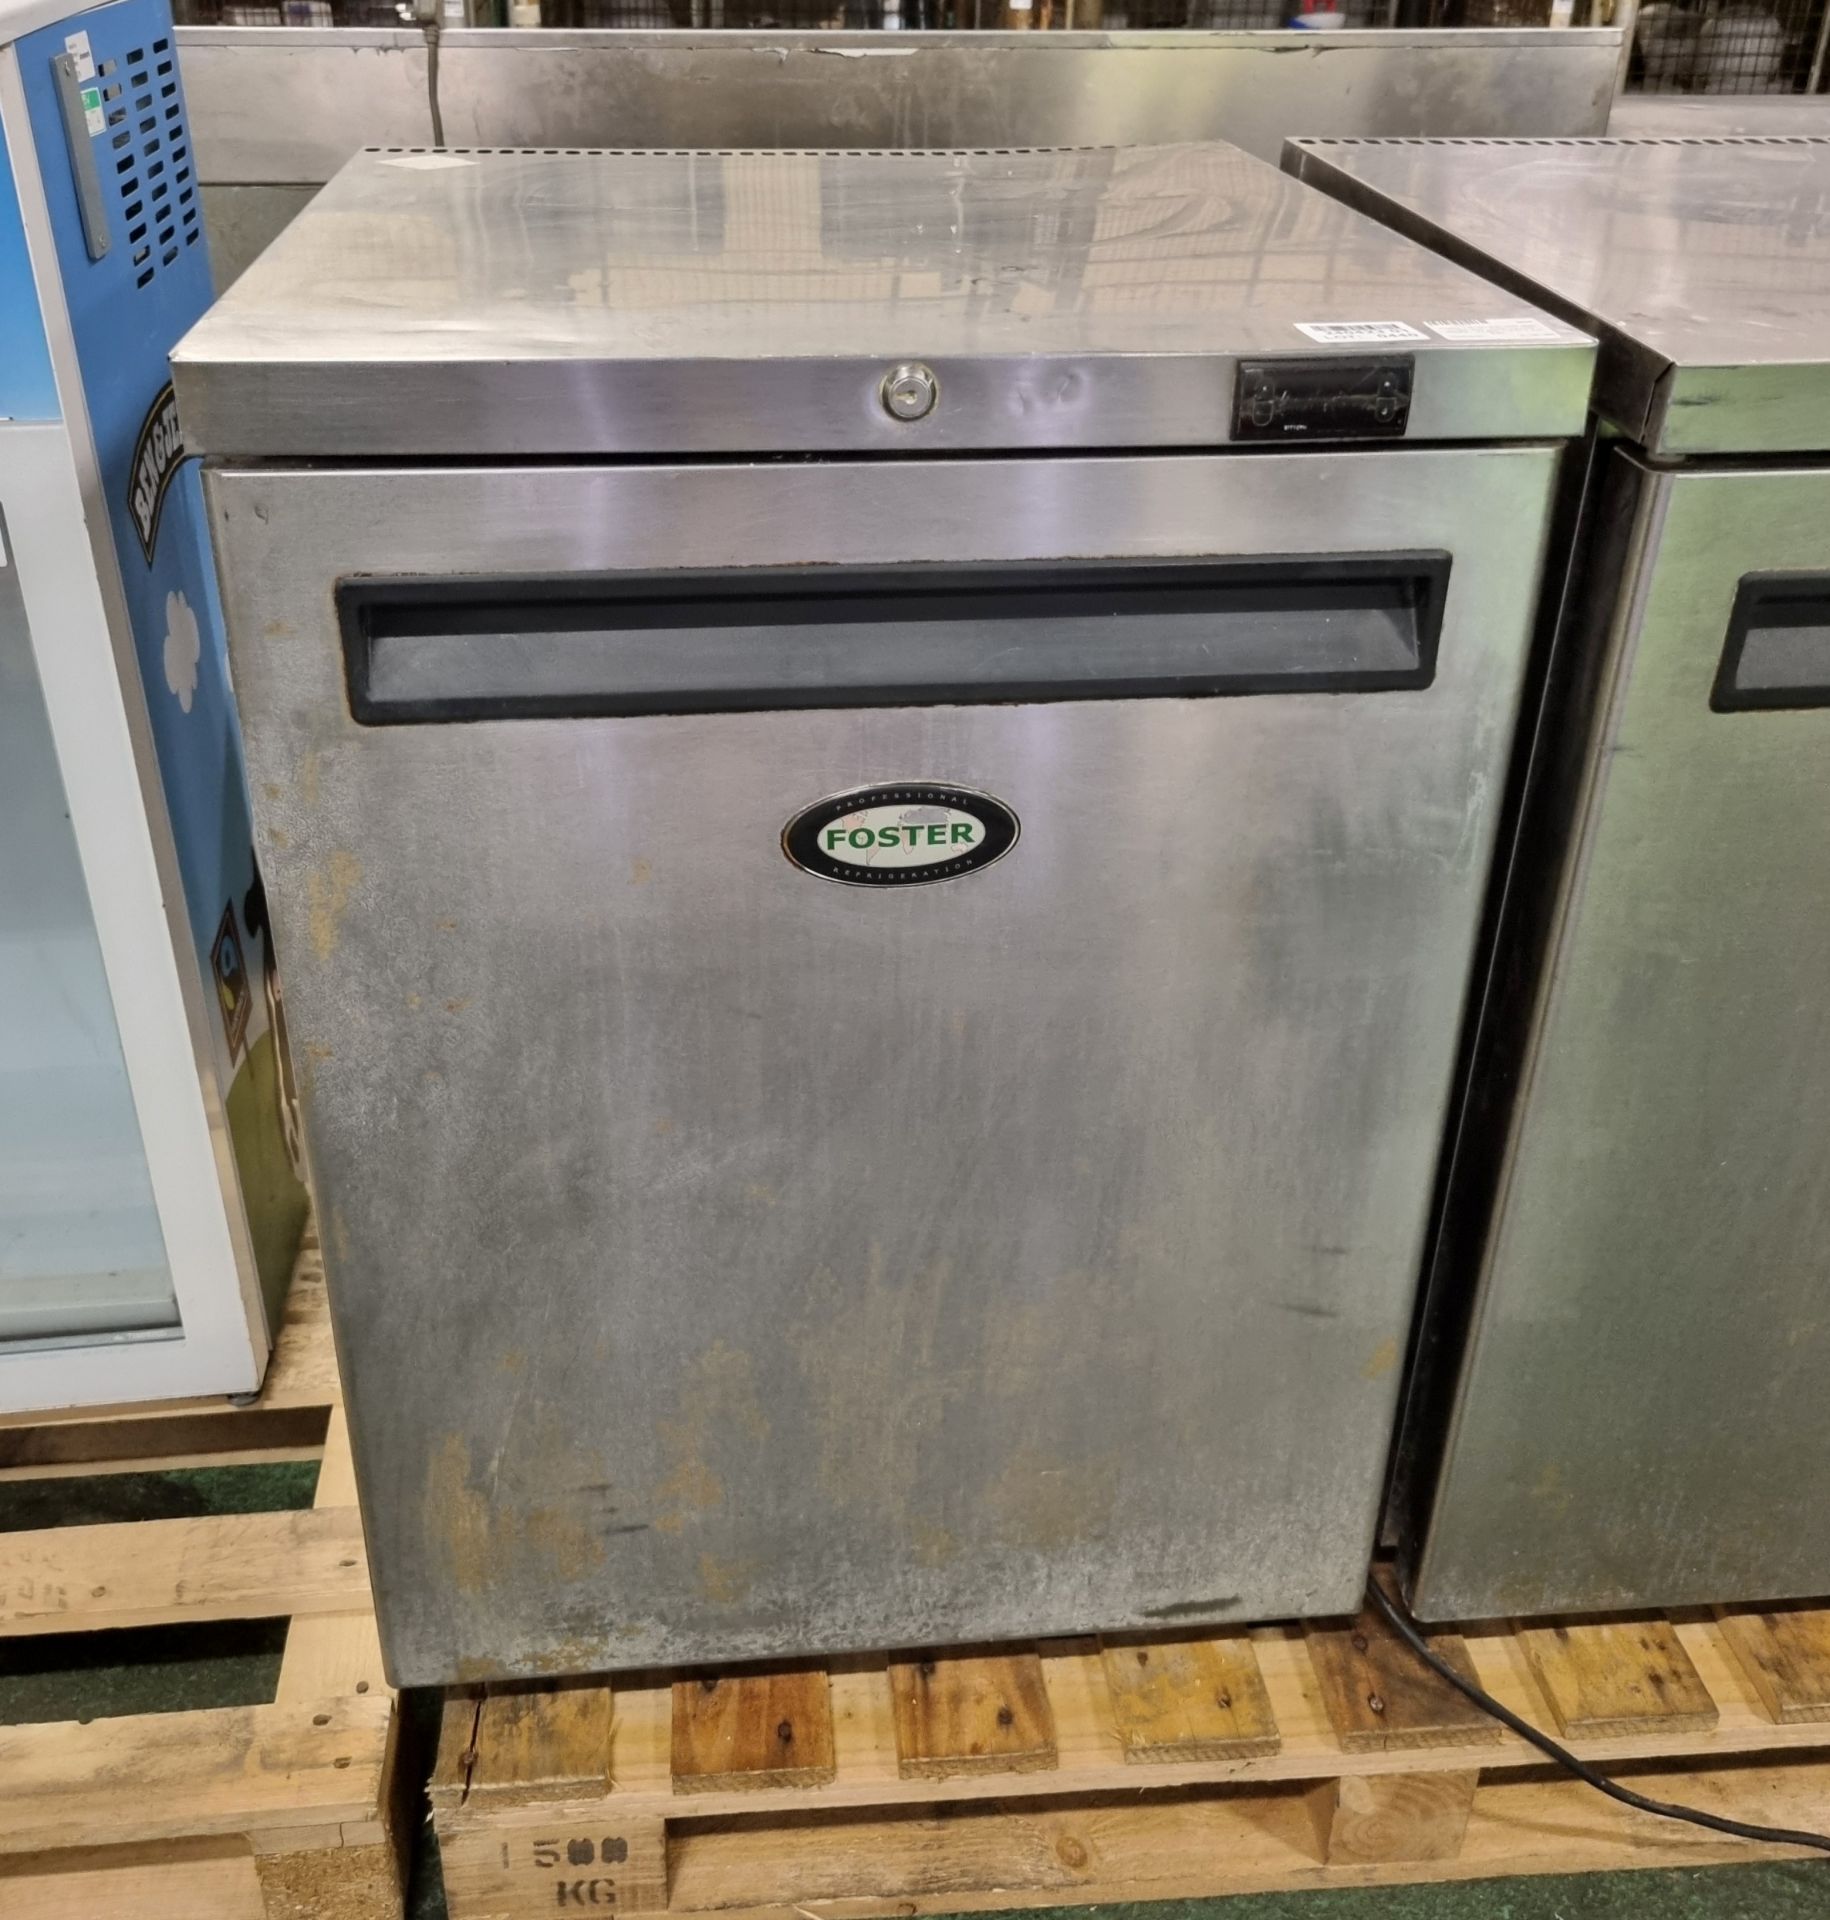 Foster LR150 stainless steel single door under counter freezer - W 605 x D 615 x H 830mm